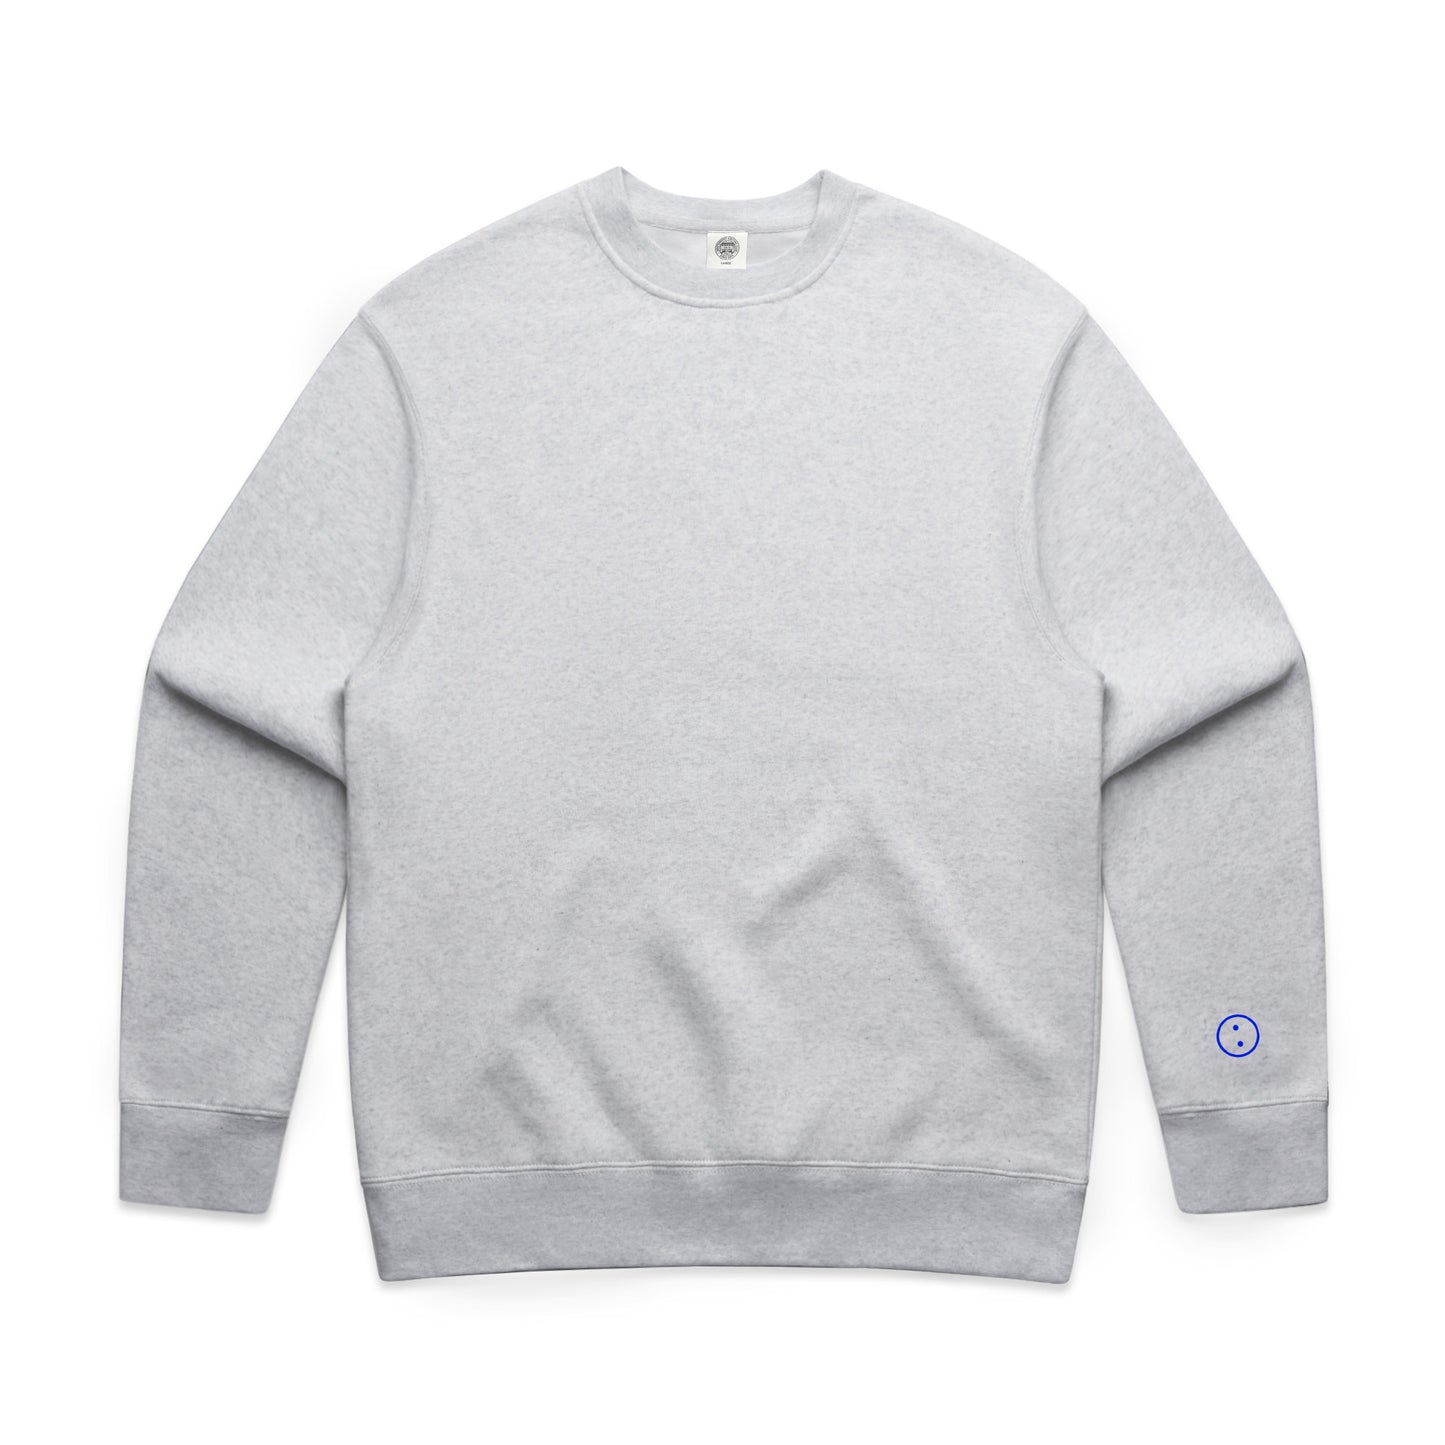 Sweaters & Hoodies – UN:IK Clothing